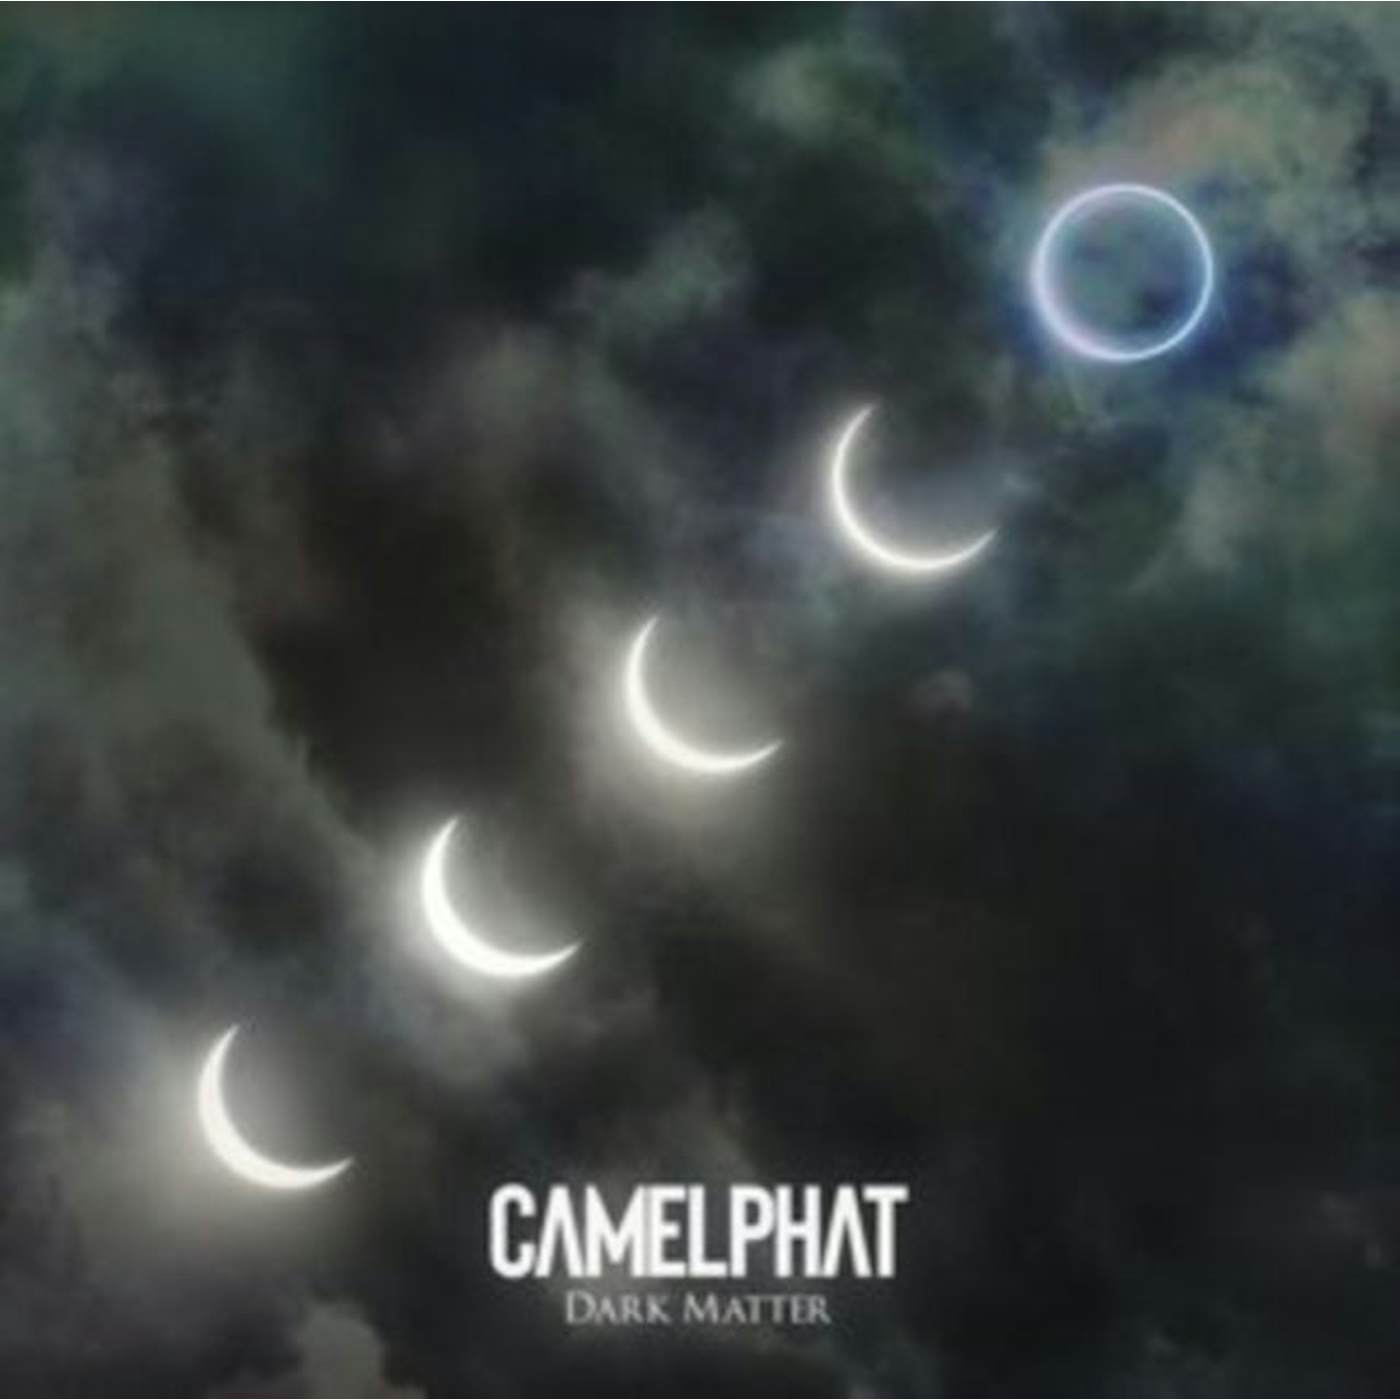 CamelPhat CameLP Vinyl Recordhat LP Vinyl Record - Dark Matter